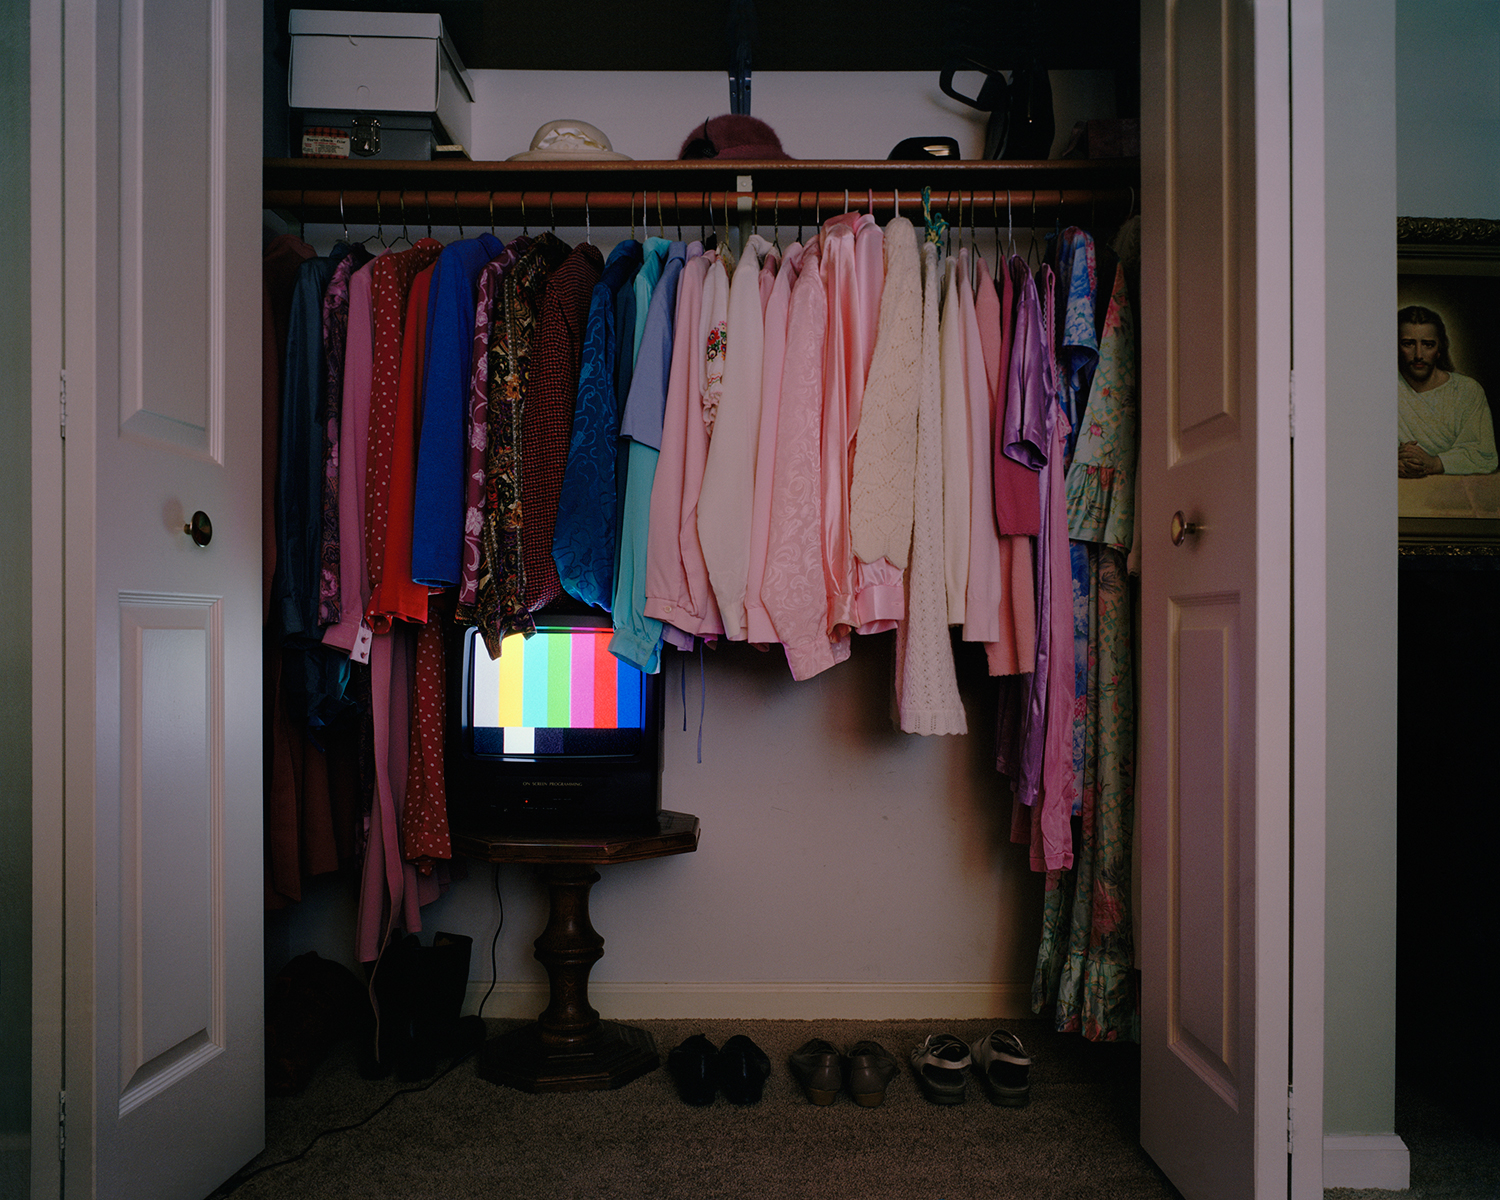  Untitled (Grandmother's Closet)